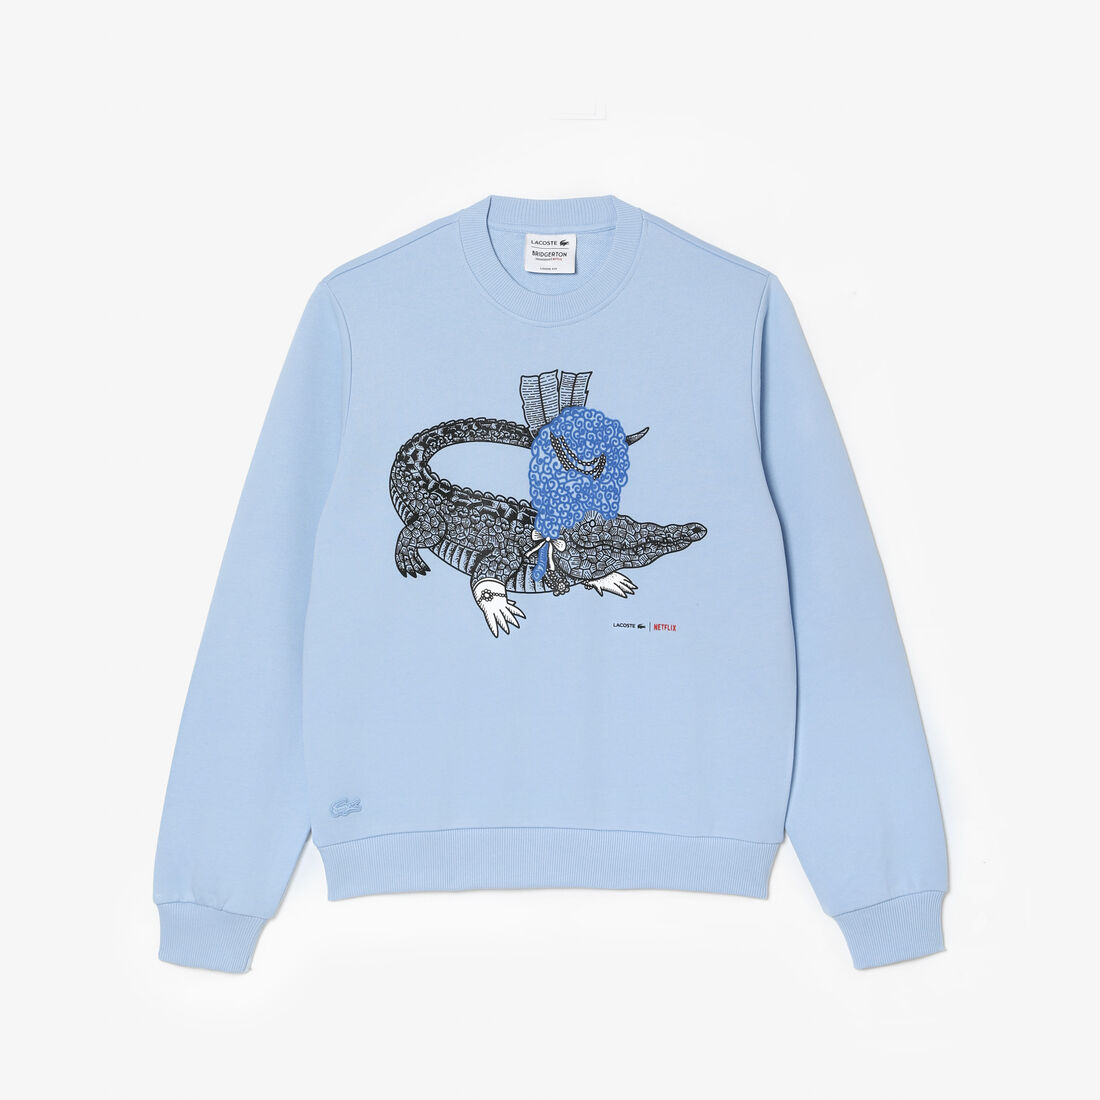 Lacoste X Netflix Loose Fit Organic Baumwoll Fleece Sweatshirts Damen Blau | IGLS-47138